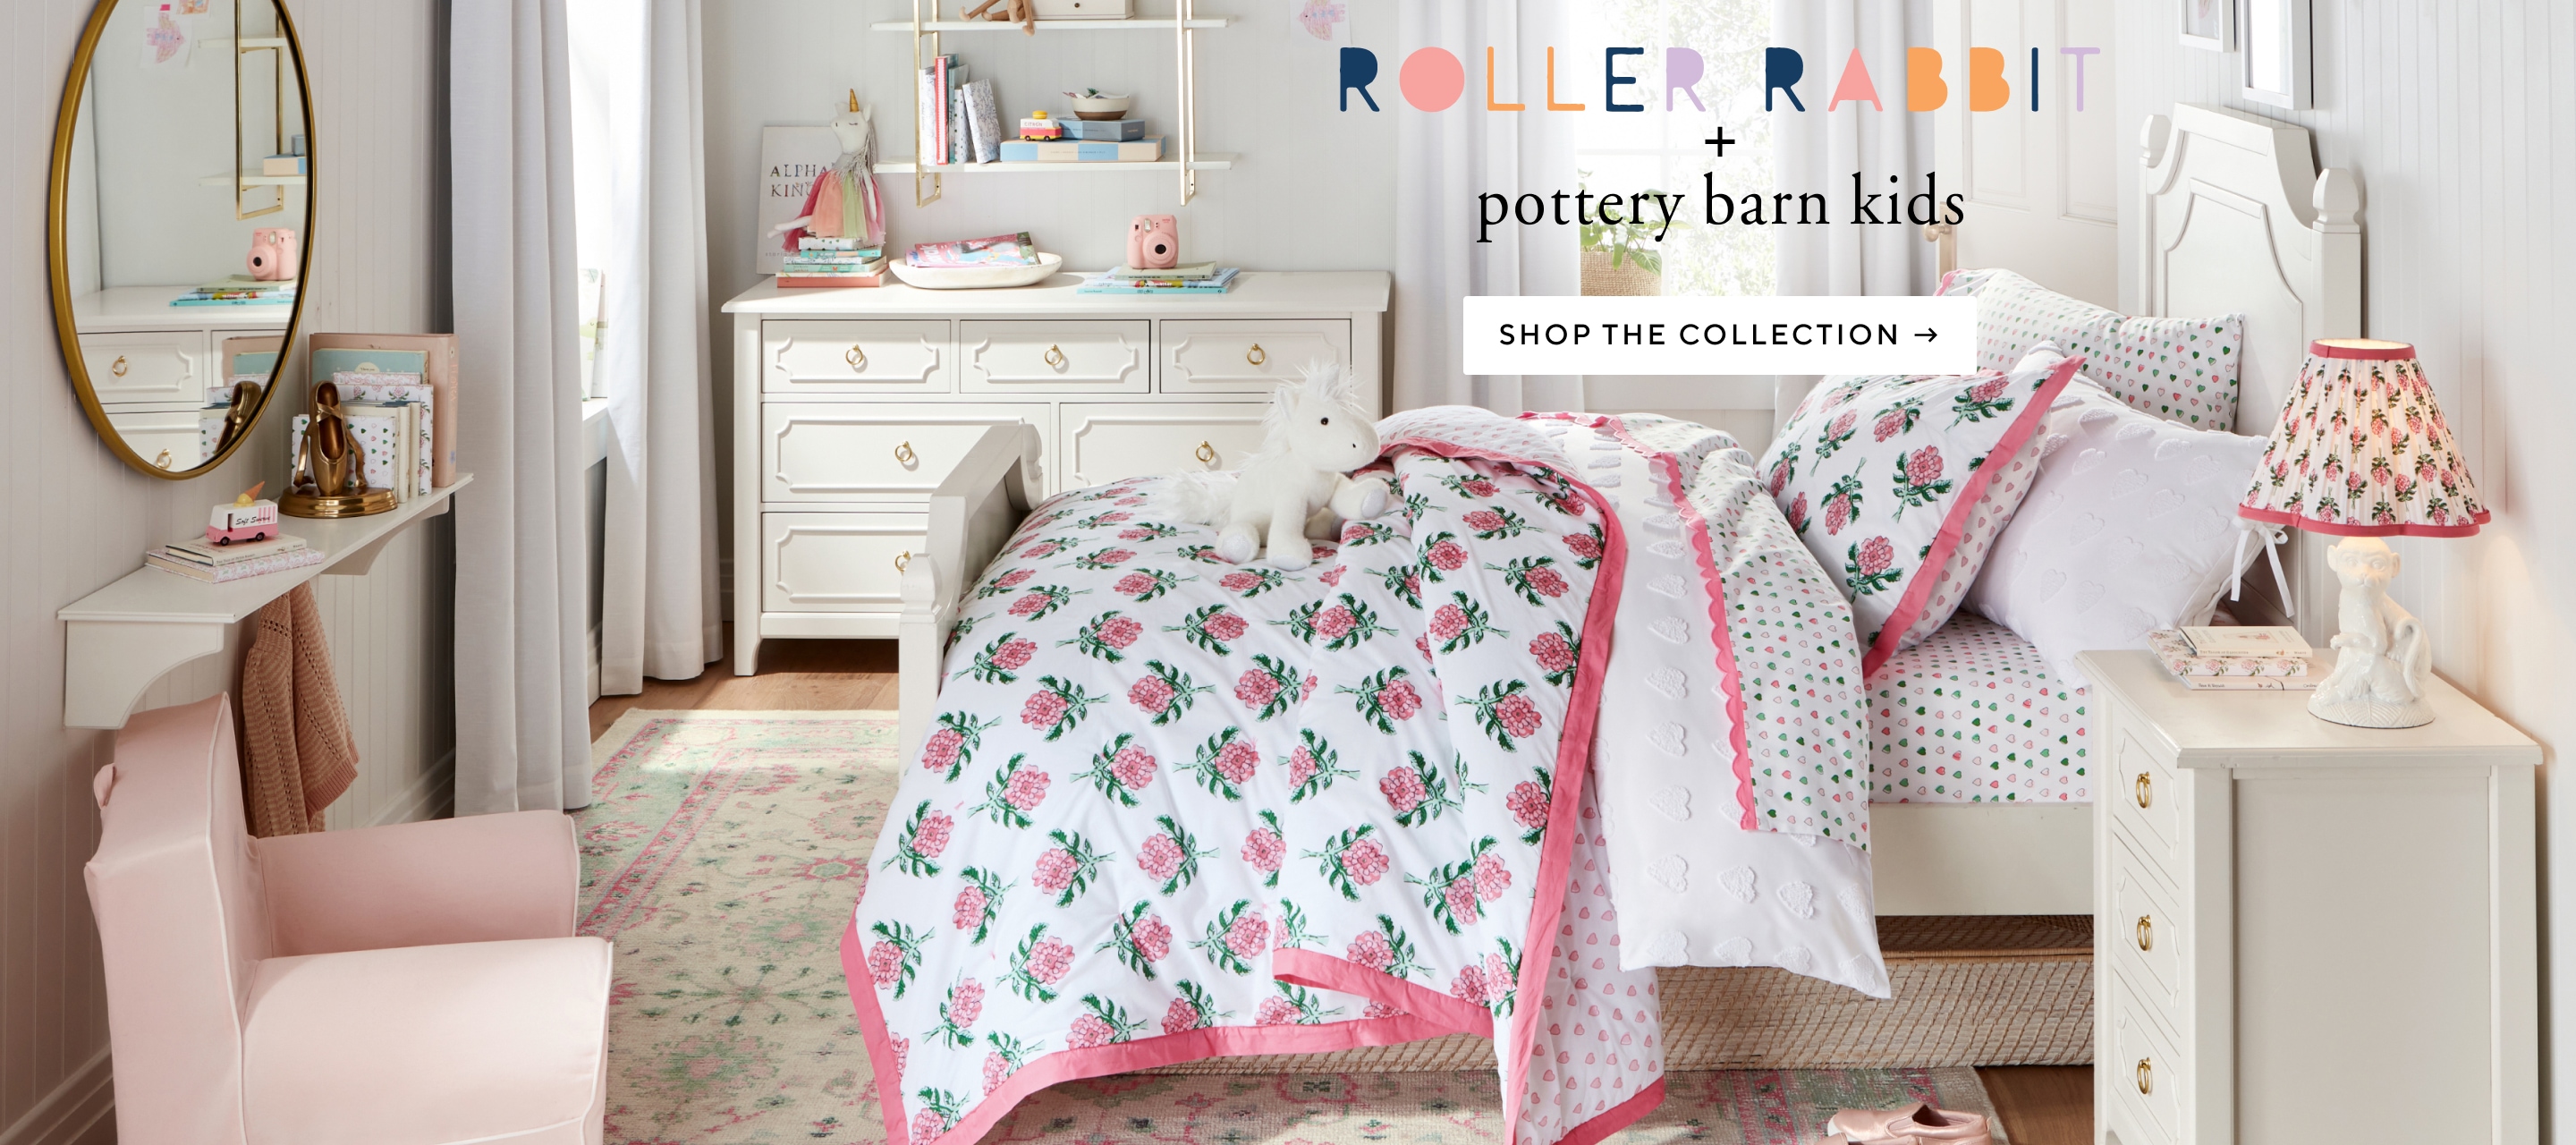 Shop Pottery Barn Kids Roller Rabbit